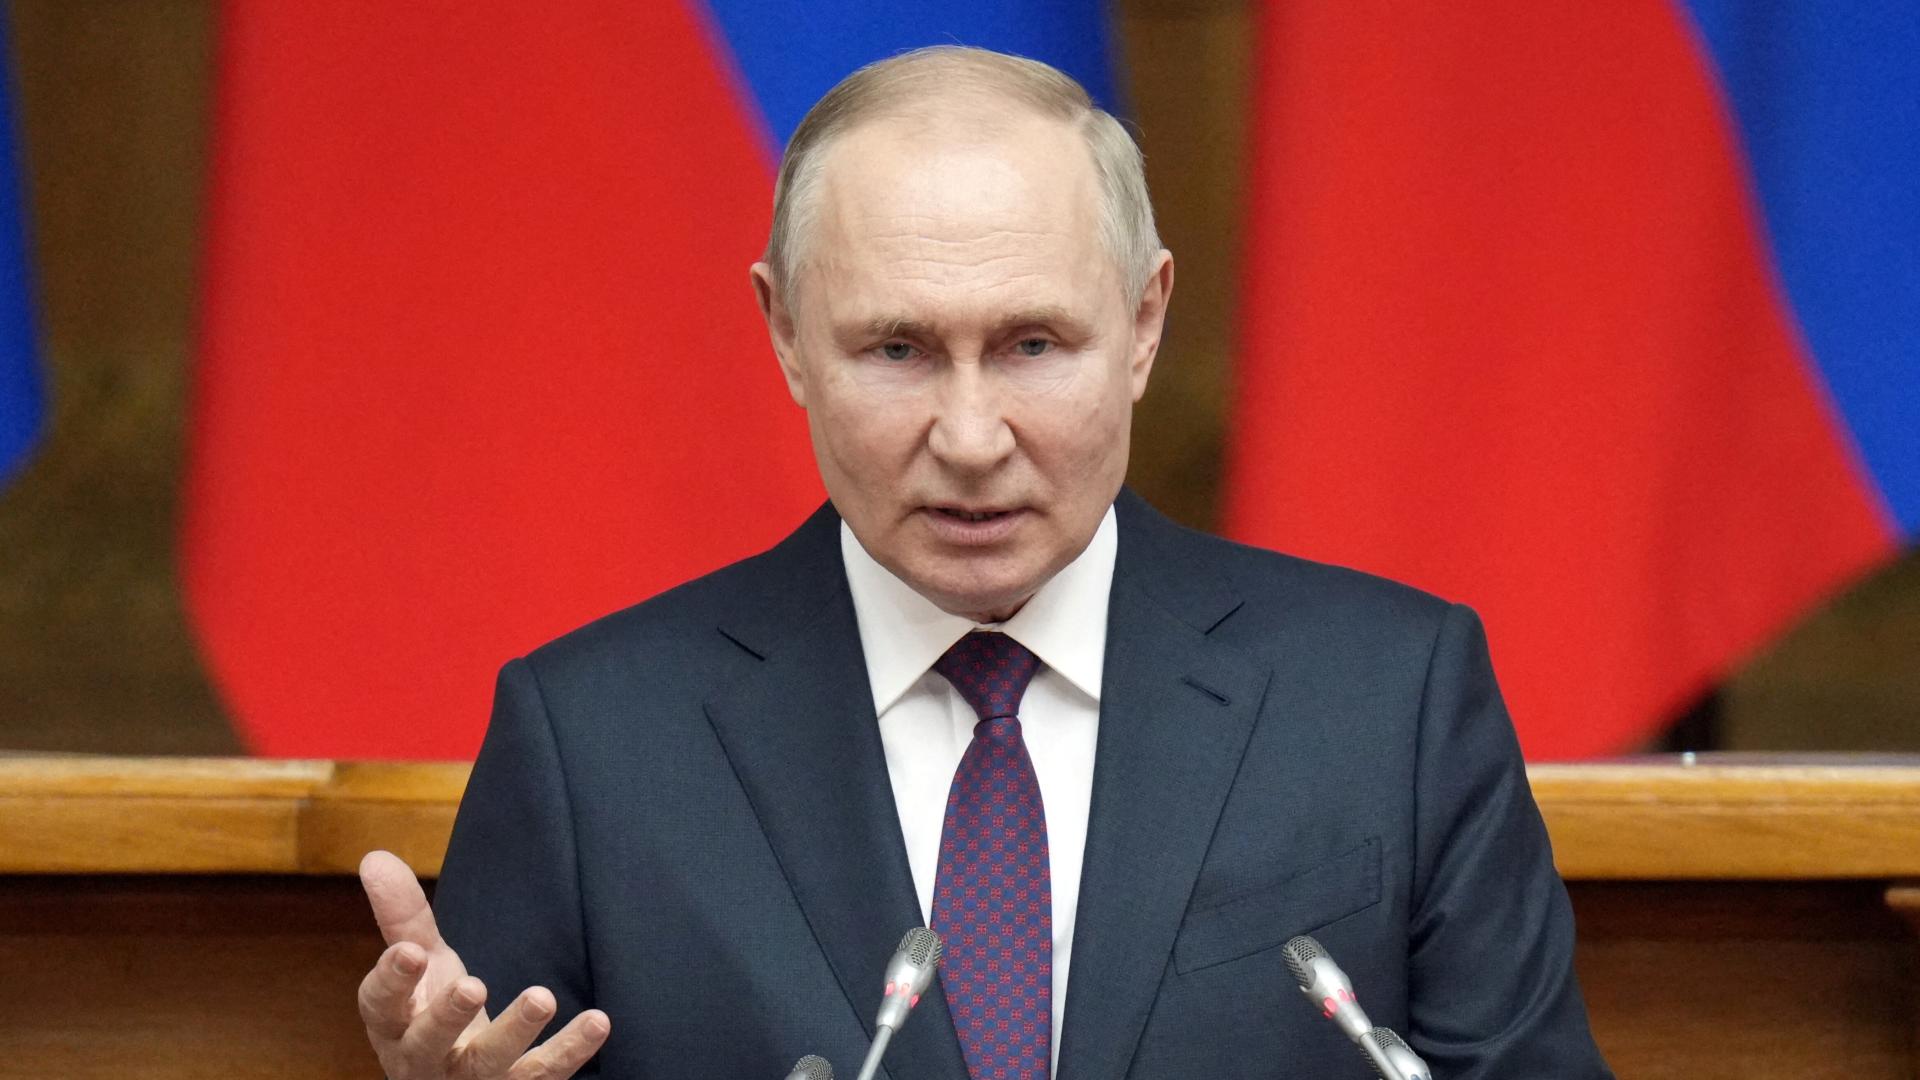 Día 430 de Ucrania: Putin busca lazos económicos con ‘países amigos’